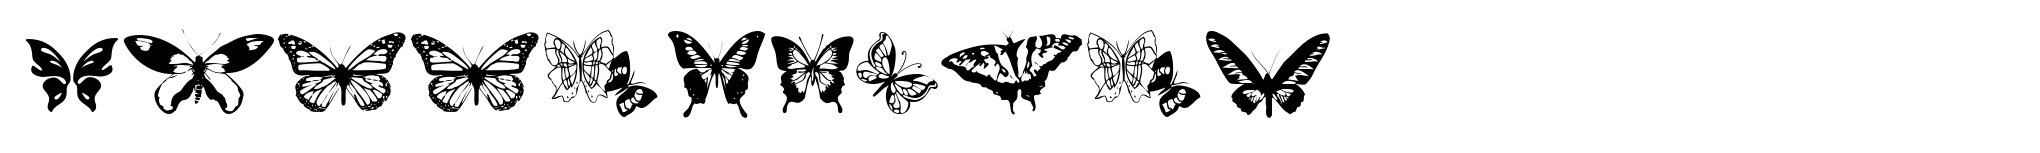 Butterflies image